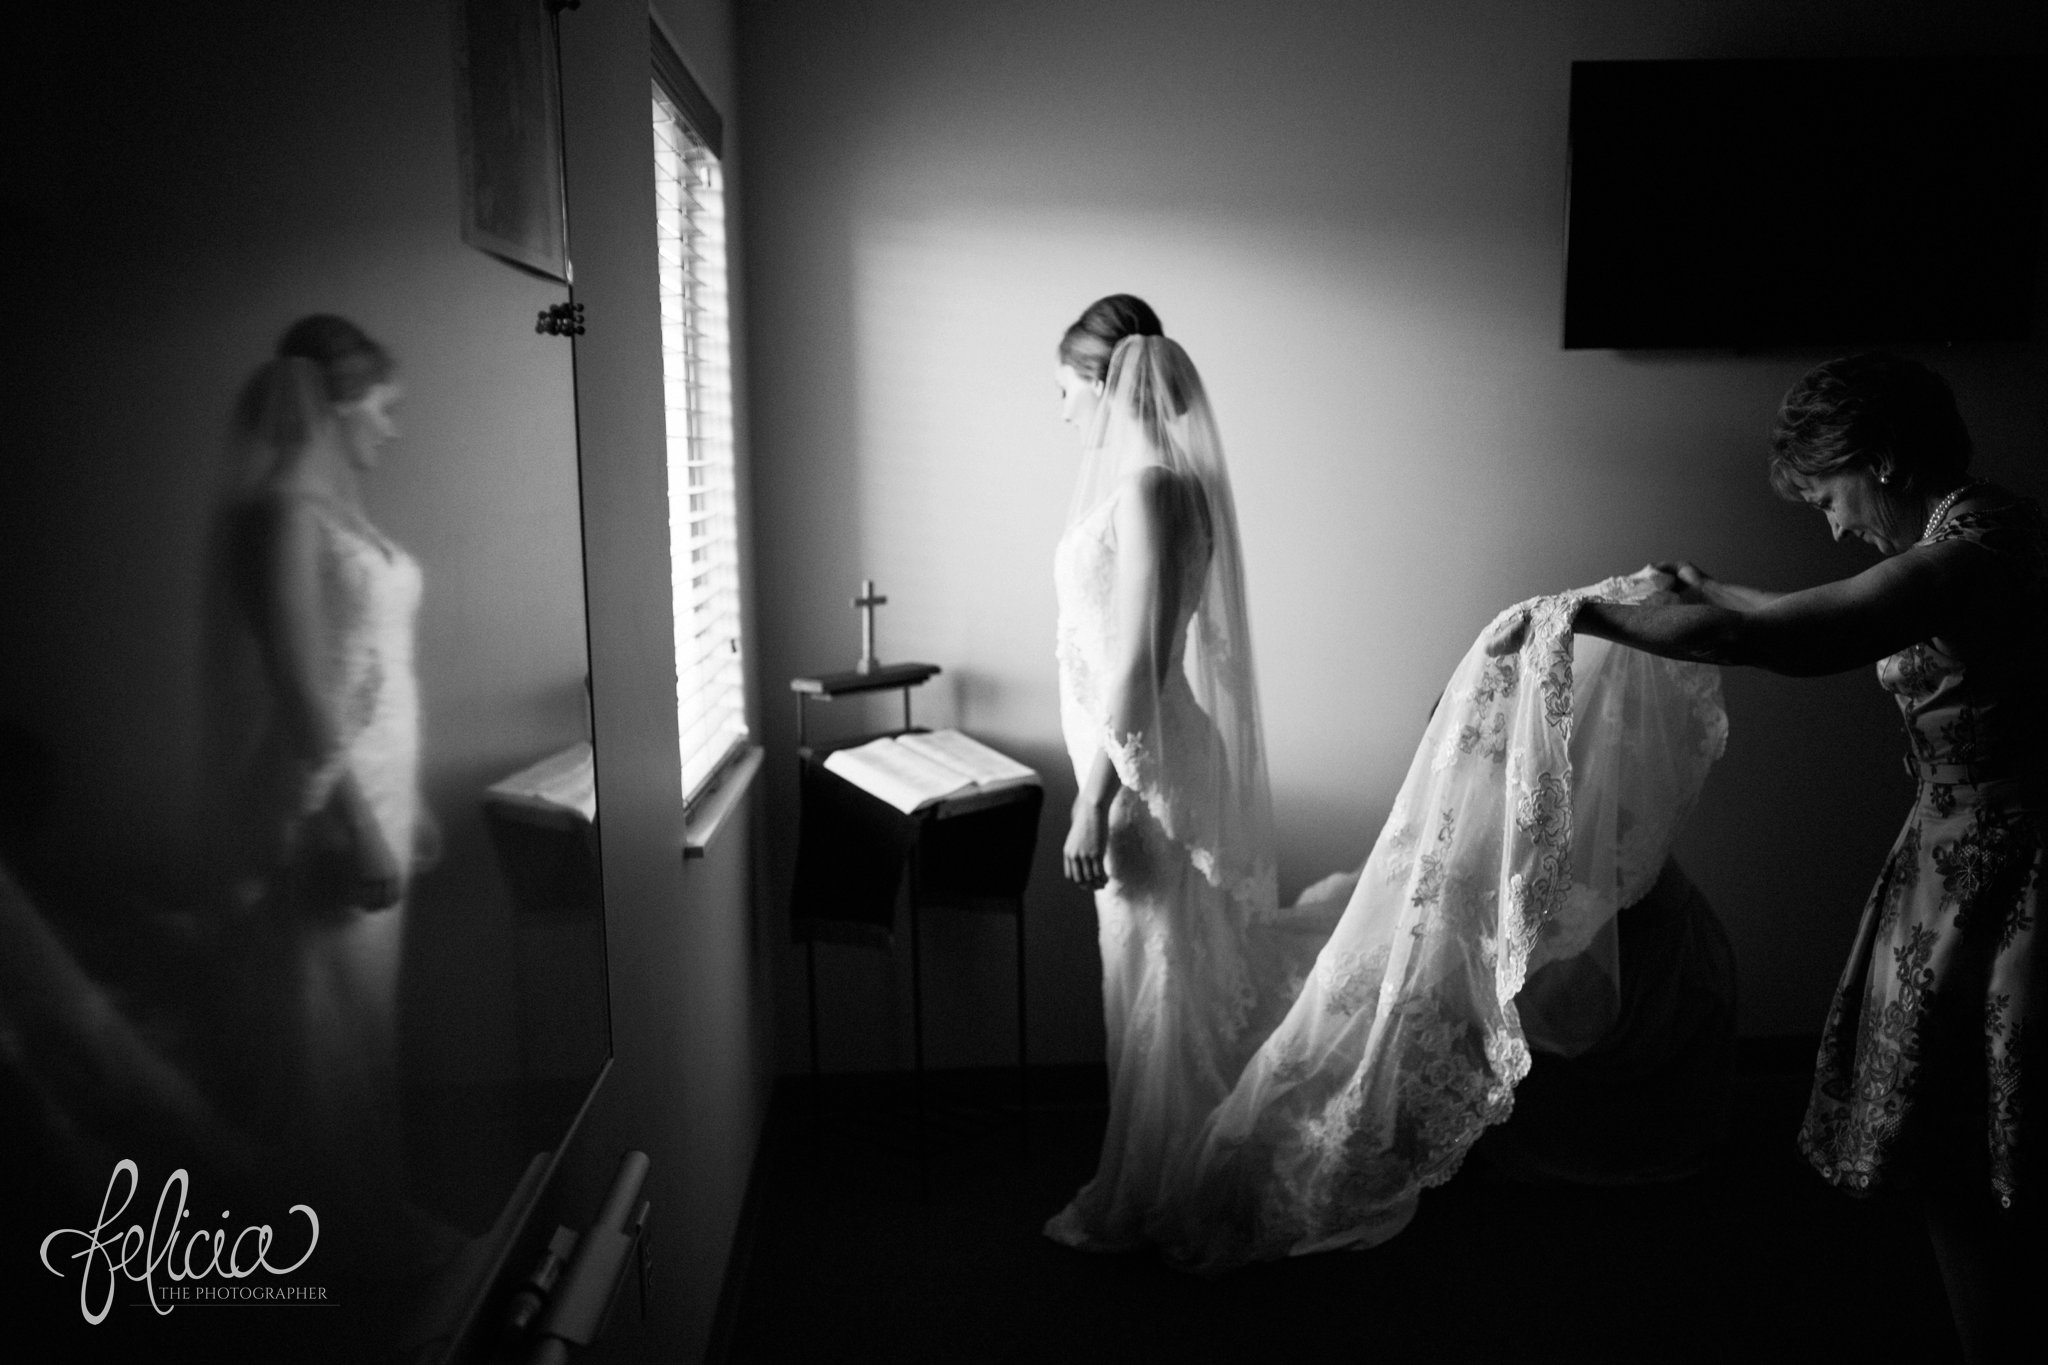 Black and White | Wedding | Wedding Photography | Wedding Photos | Travel Photographer | Images by feliciathephotographer.com | Getting Ready | Wedding Prep | Putting on Dress | Profile | Long Train 